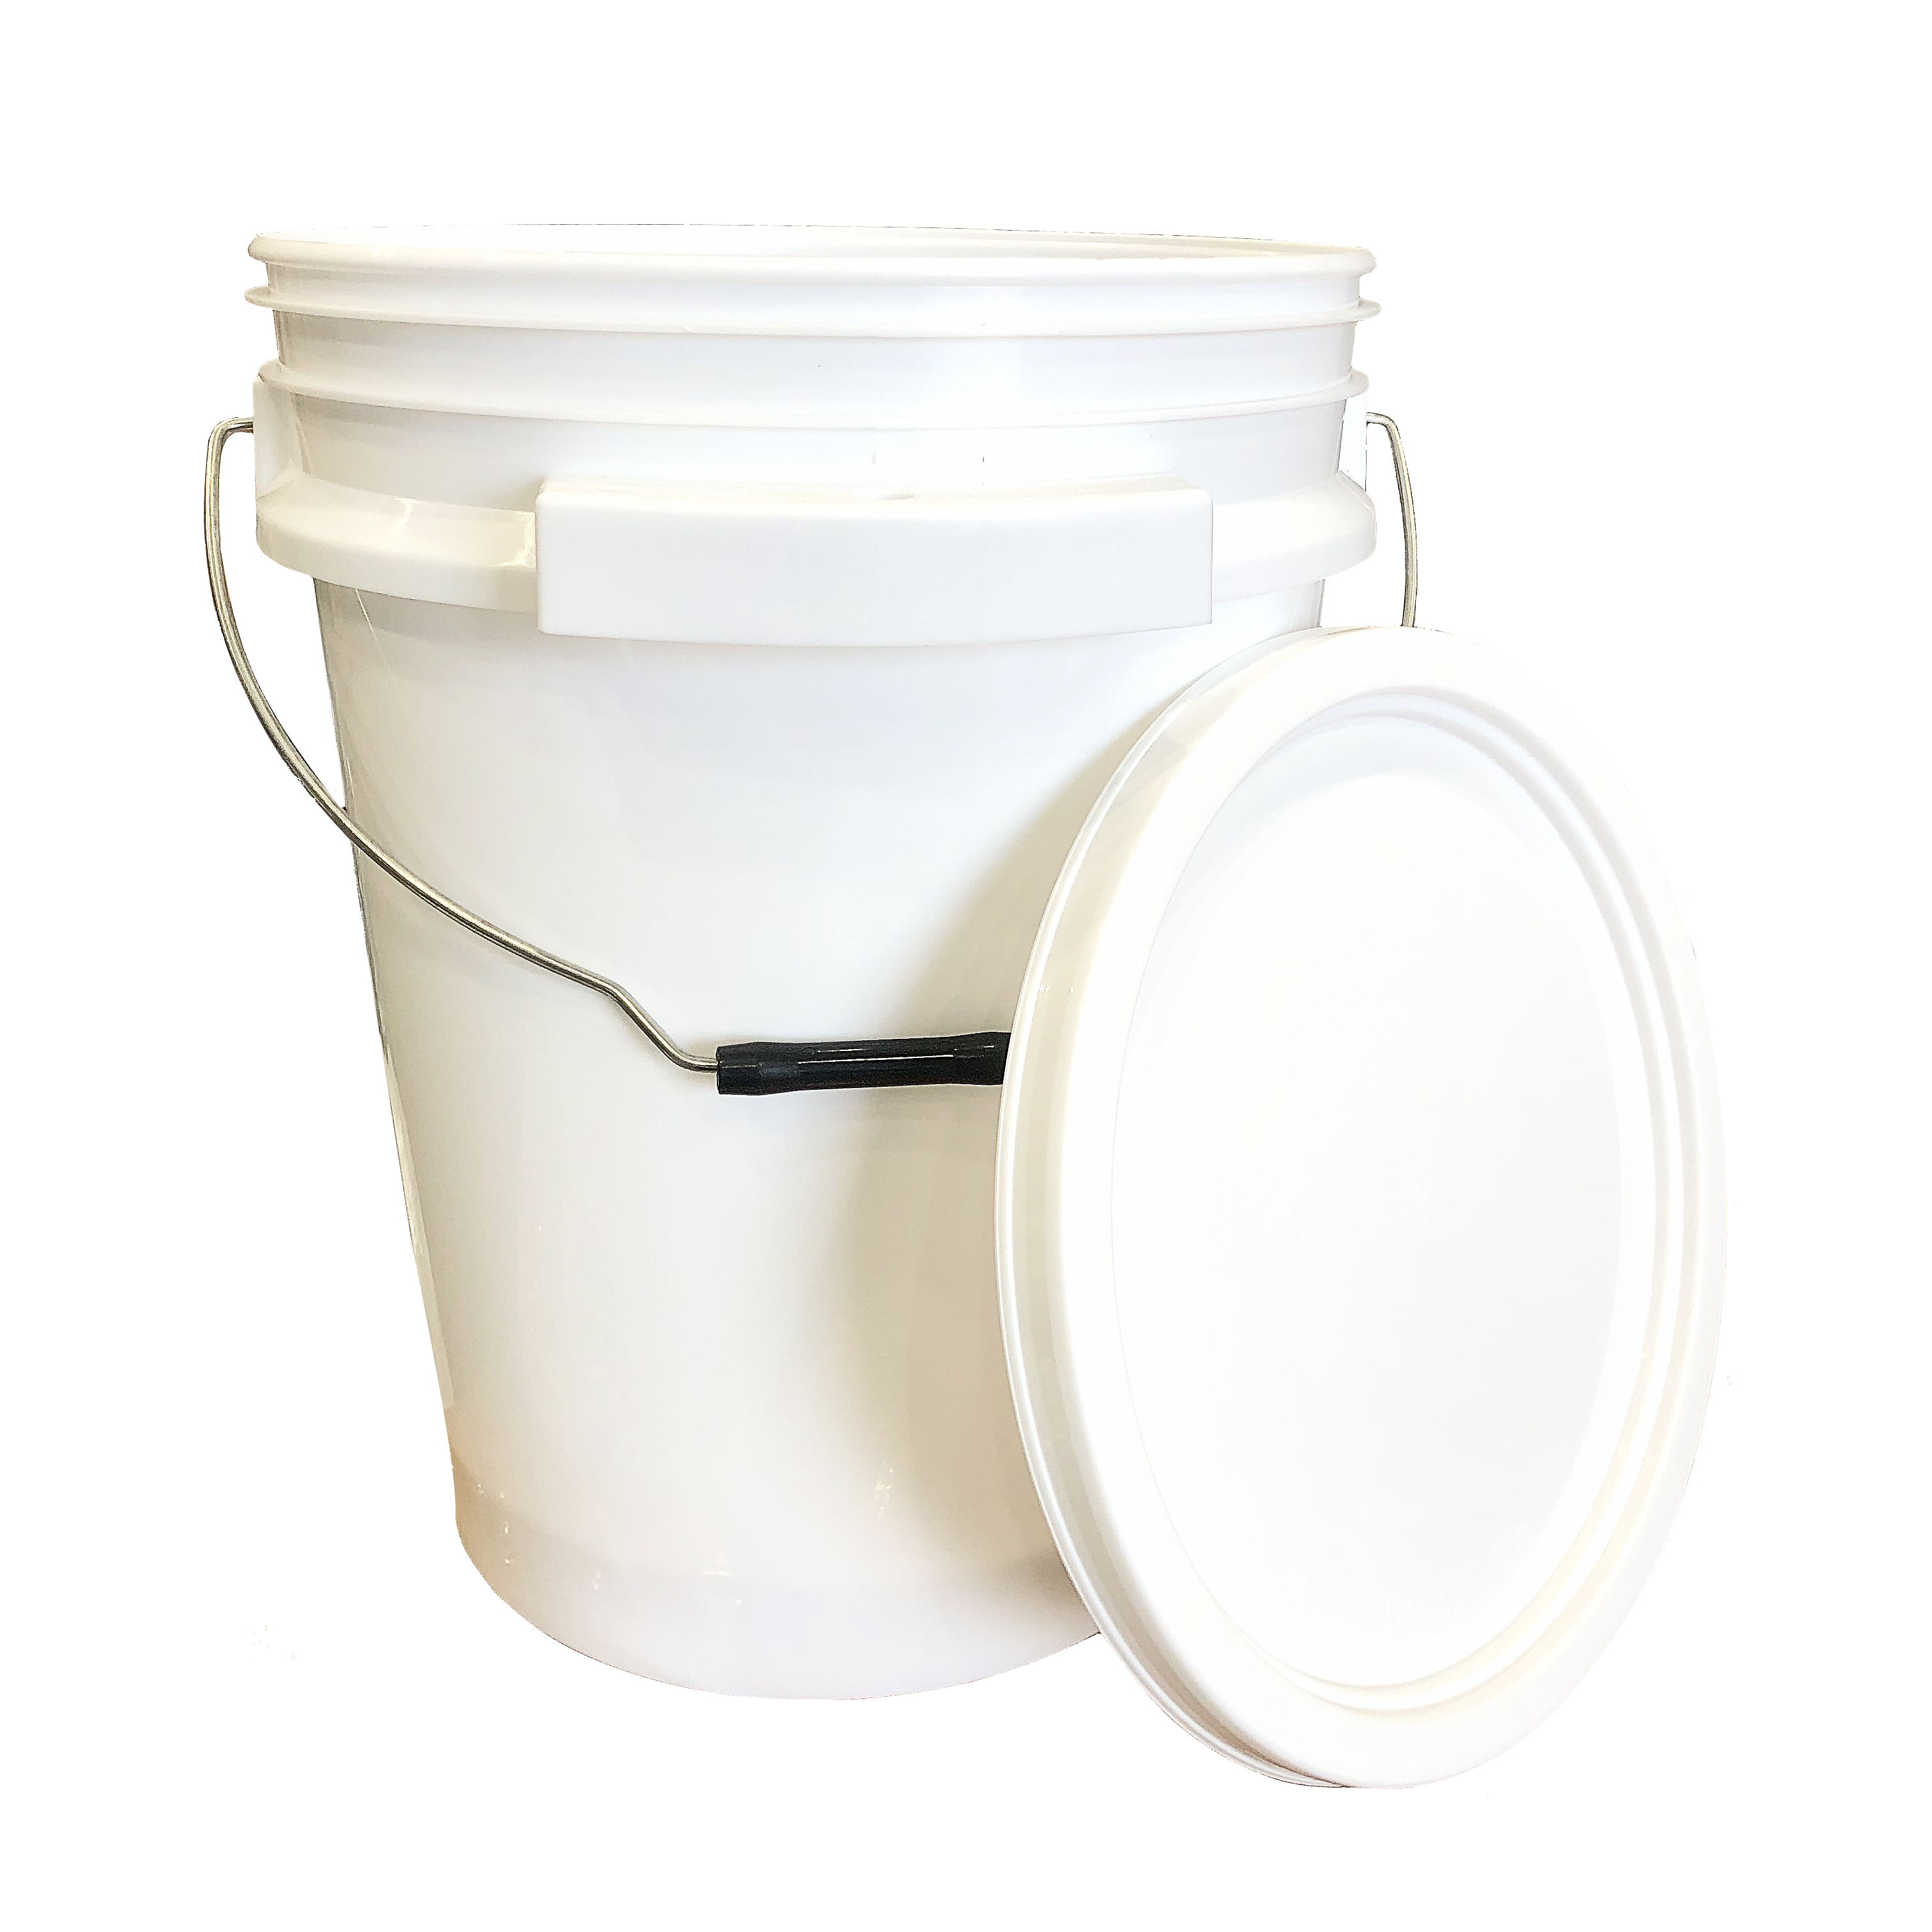 iSmart JOHN(TOILET)/PAPER & Accessory HOLDER-Innovative Design Portable Bucket Toilet with Paper Holder